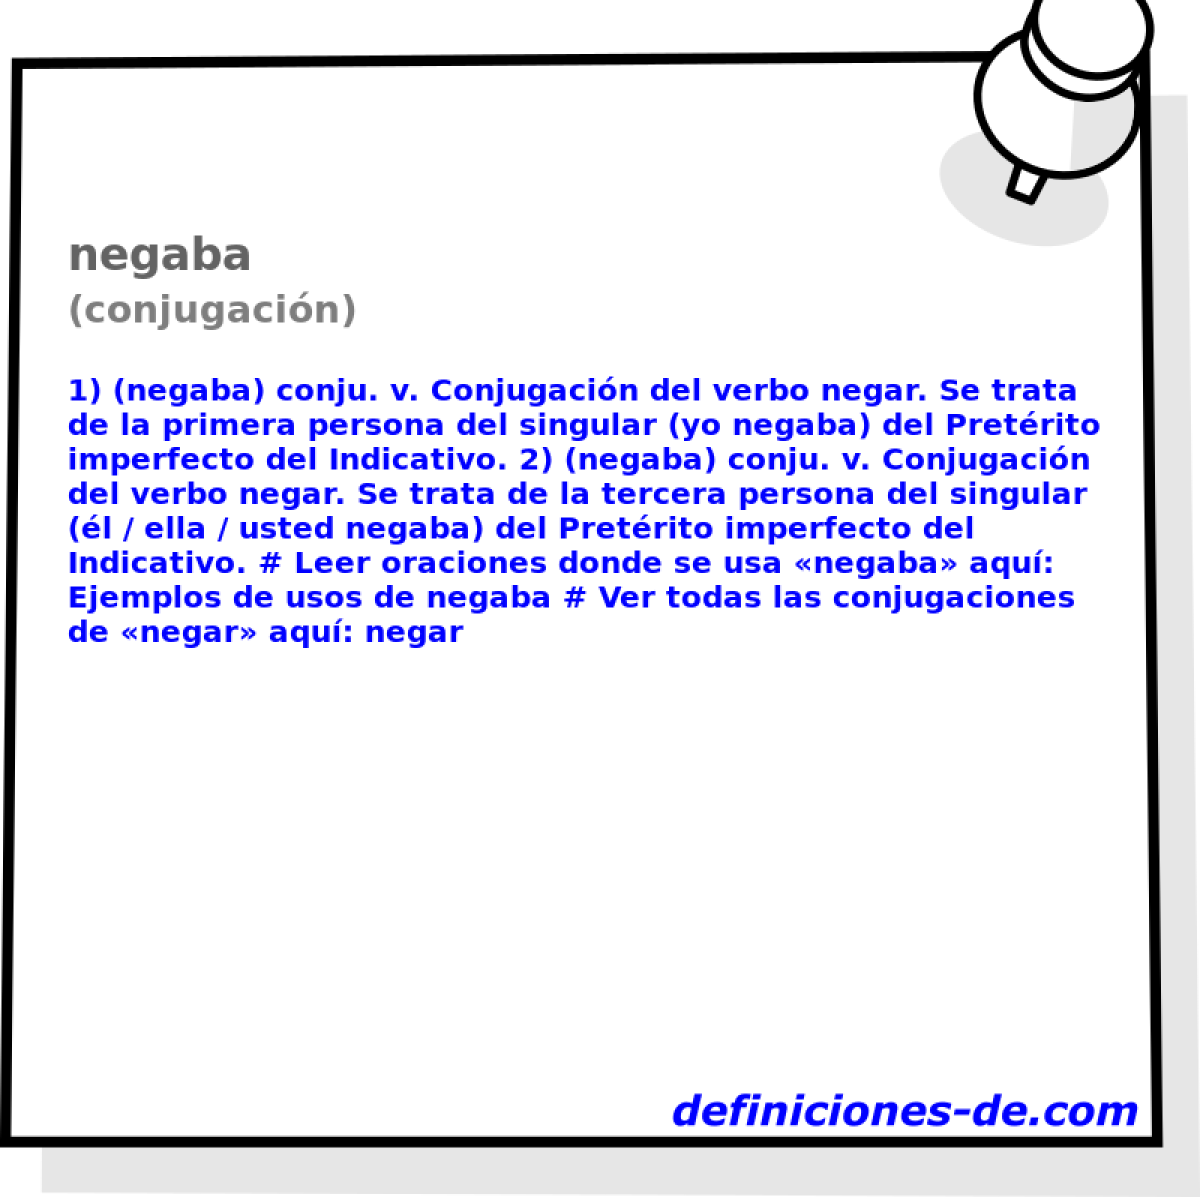 negaba (conjugacin)